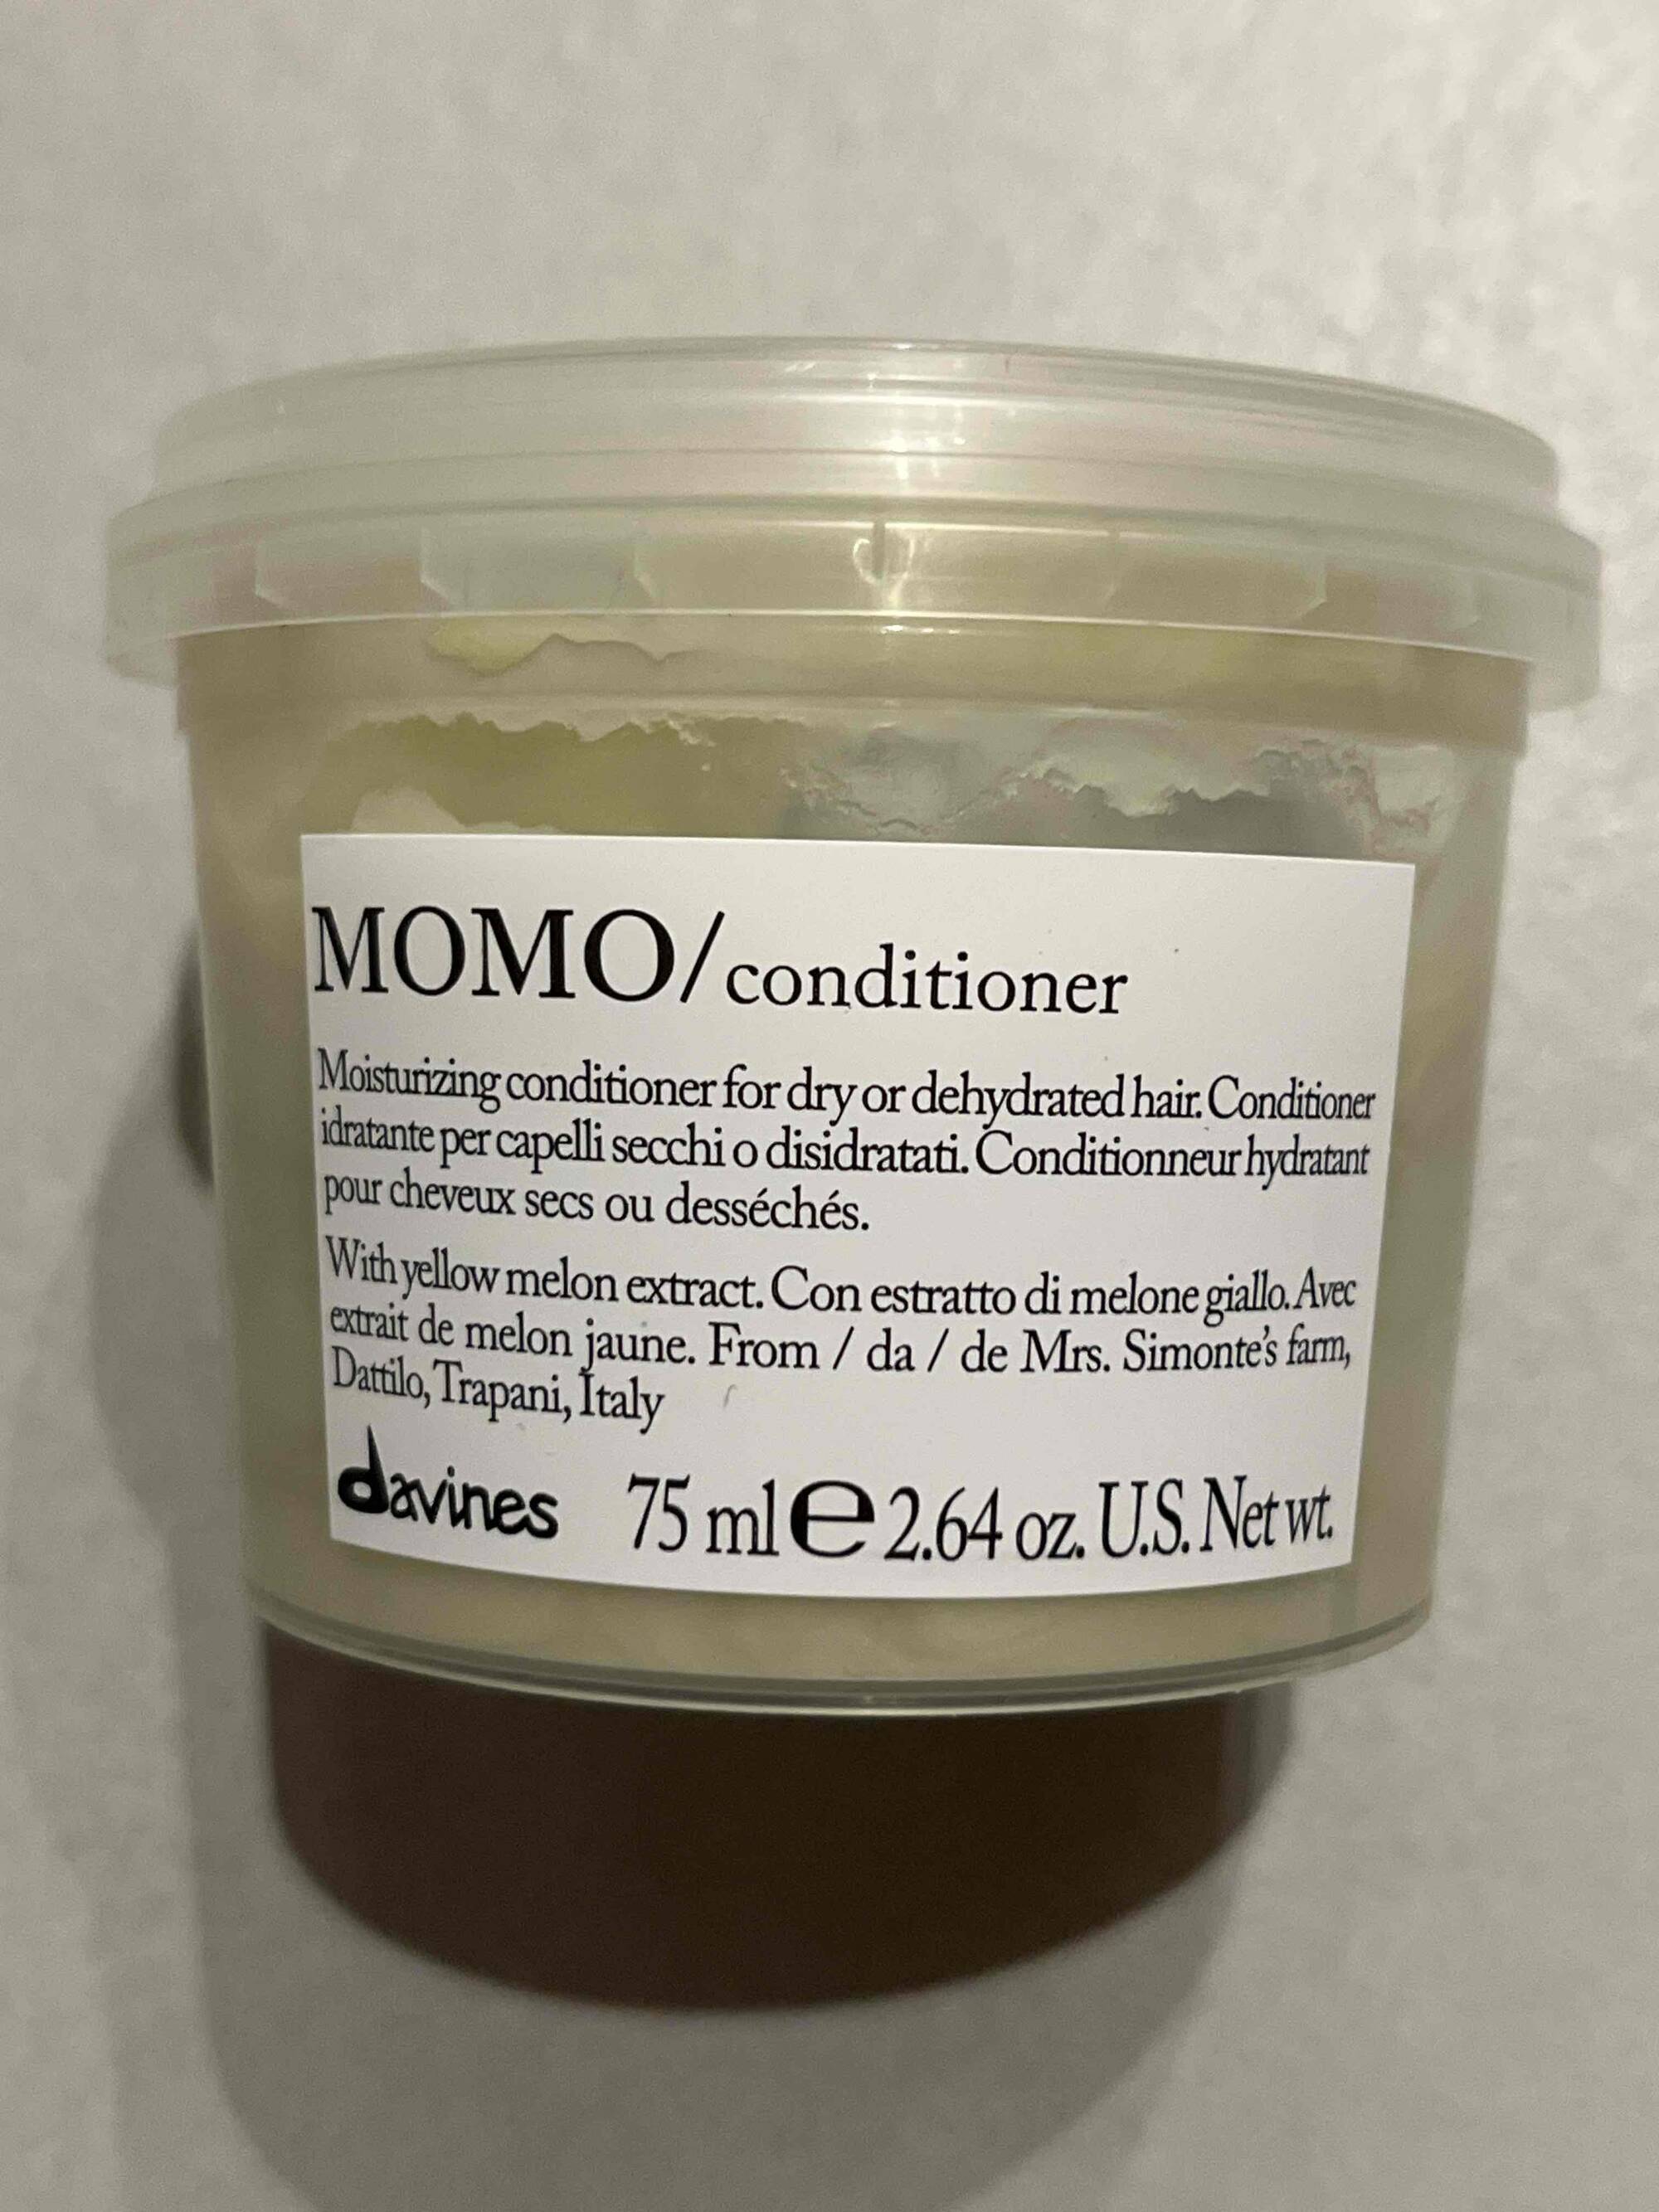 DAVINES - Momo/conditioner